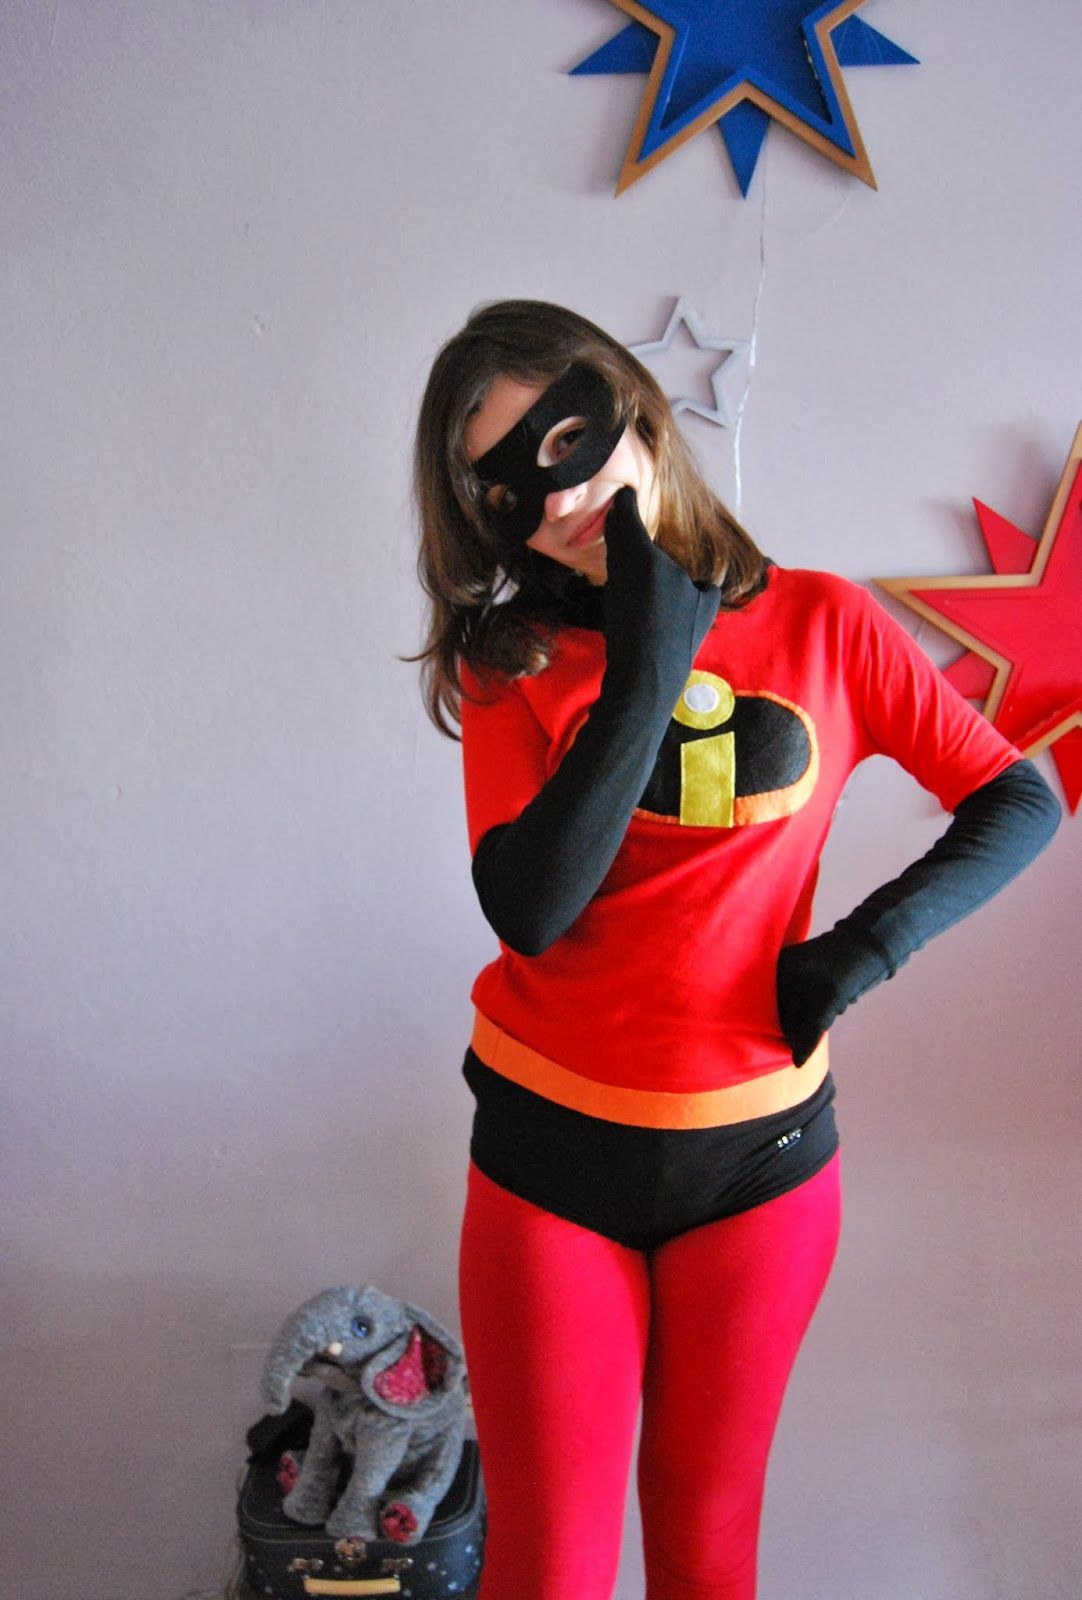 Incredibles Costume DIY
 The Incredibles costume so easy DIY costume Los